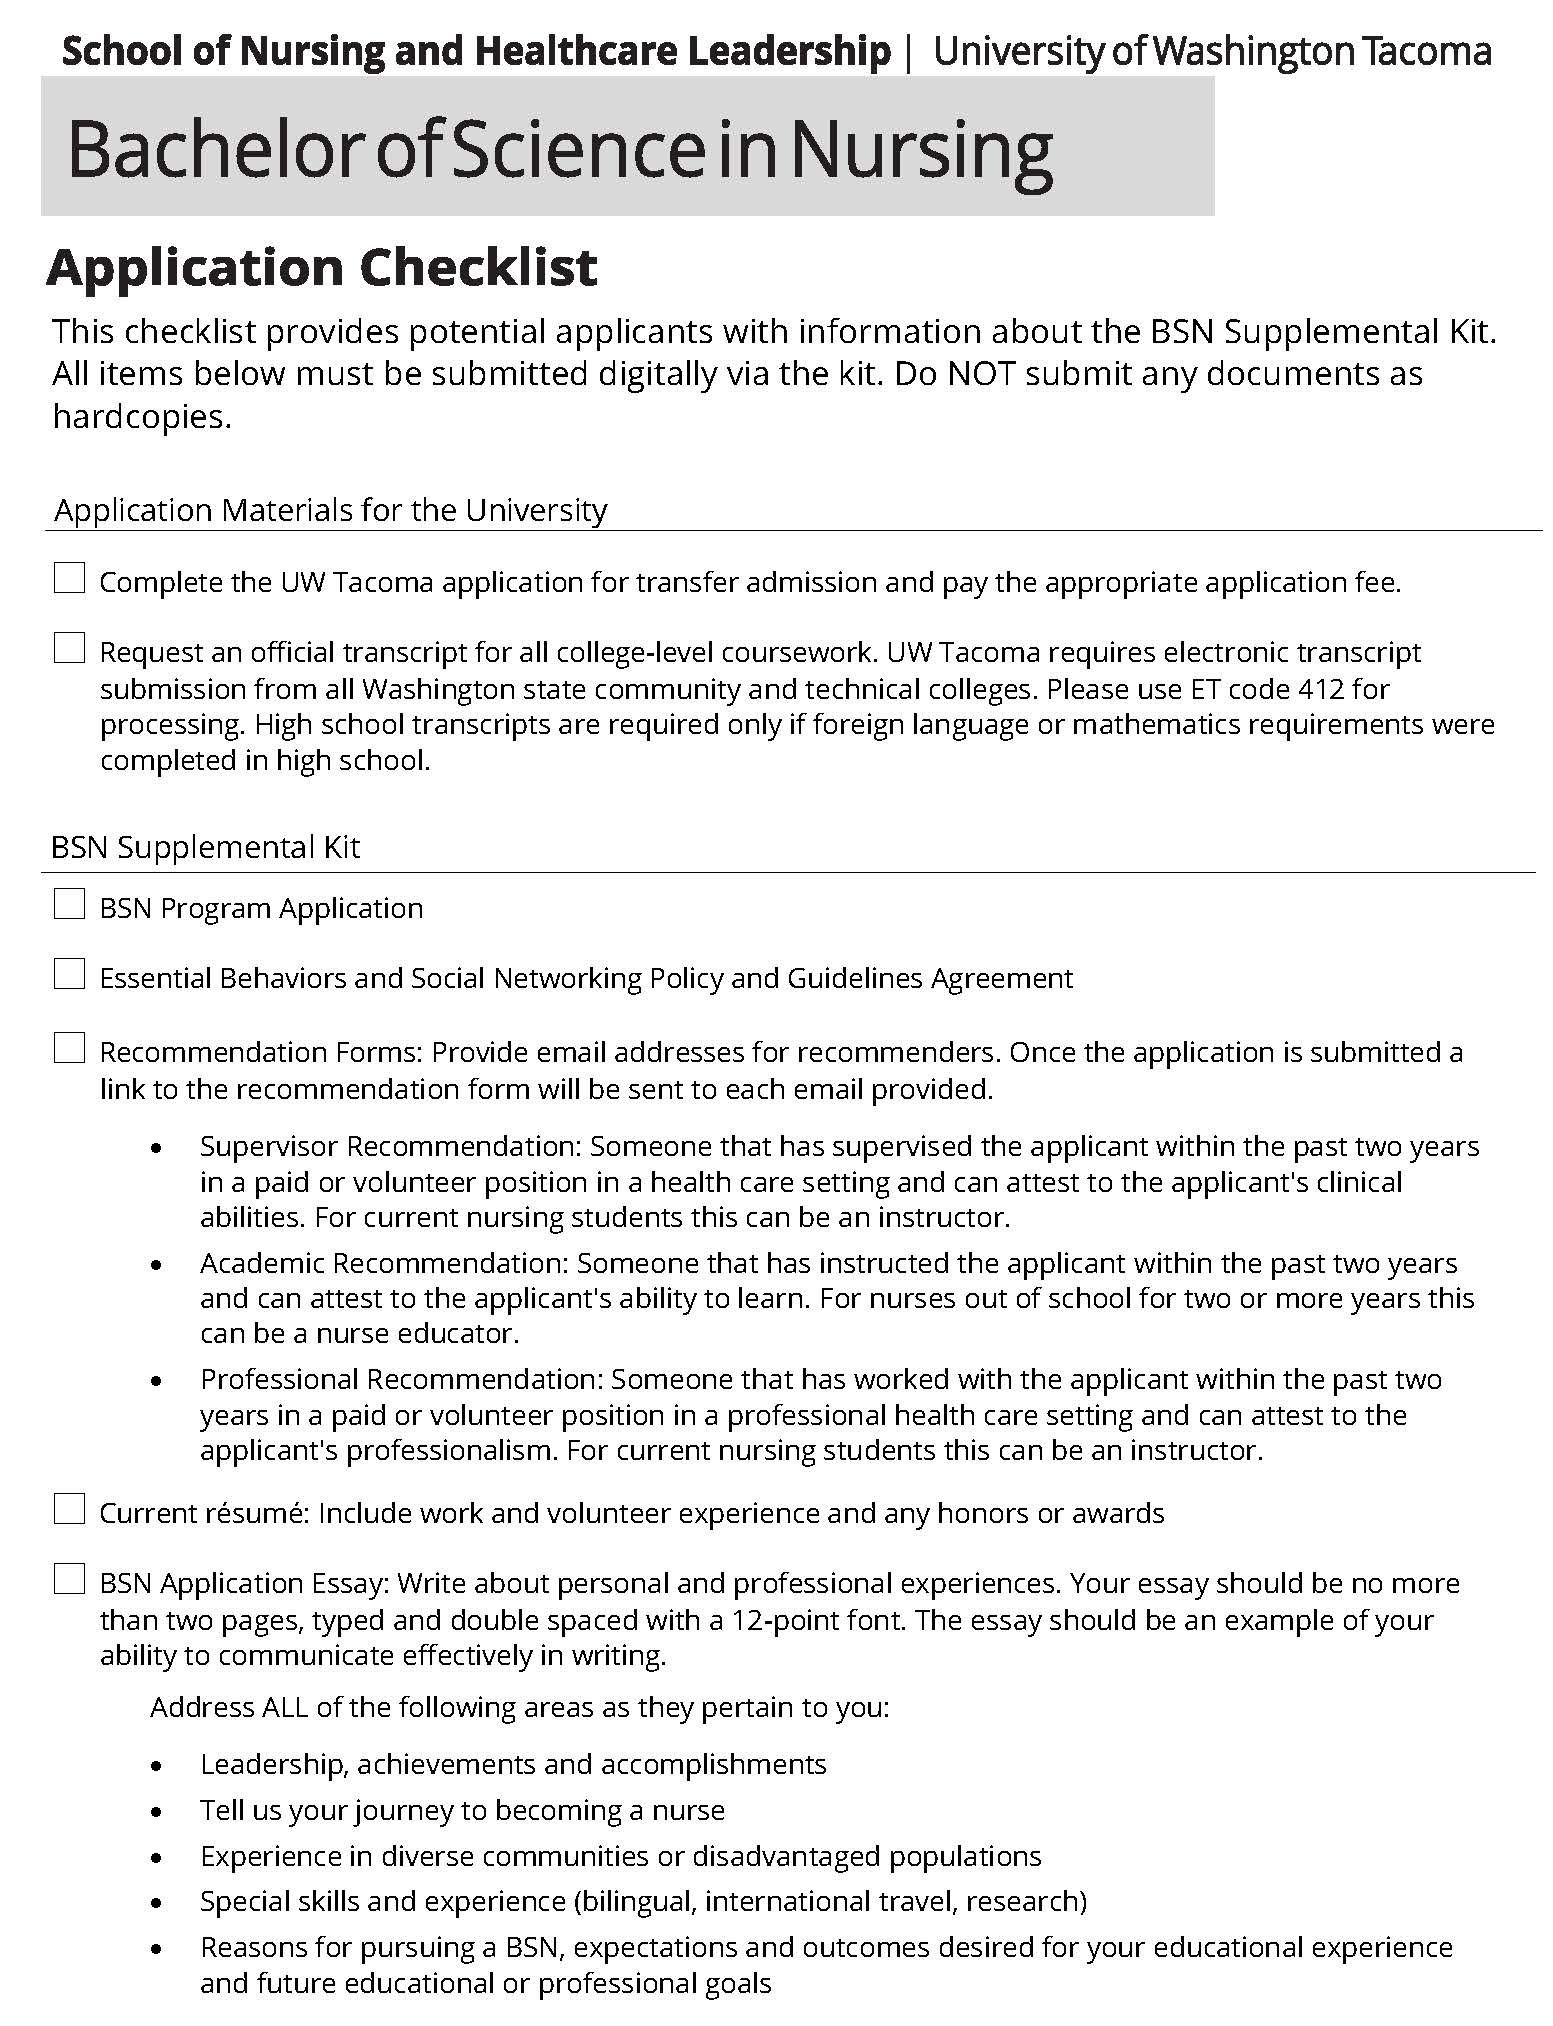 BSN Application Checklist